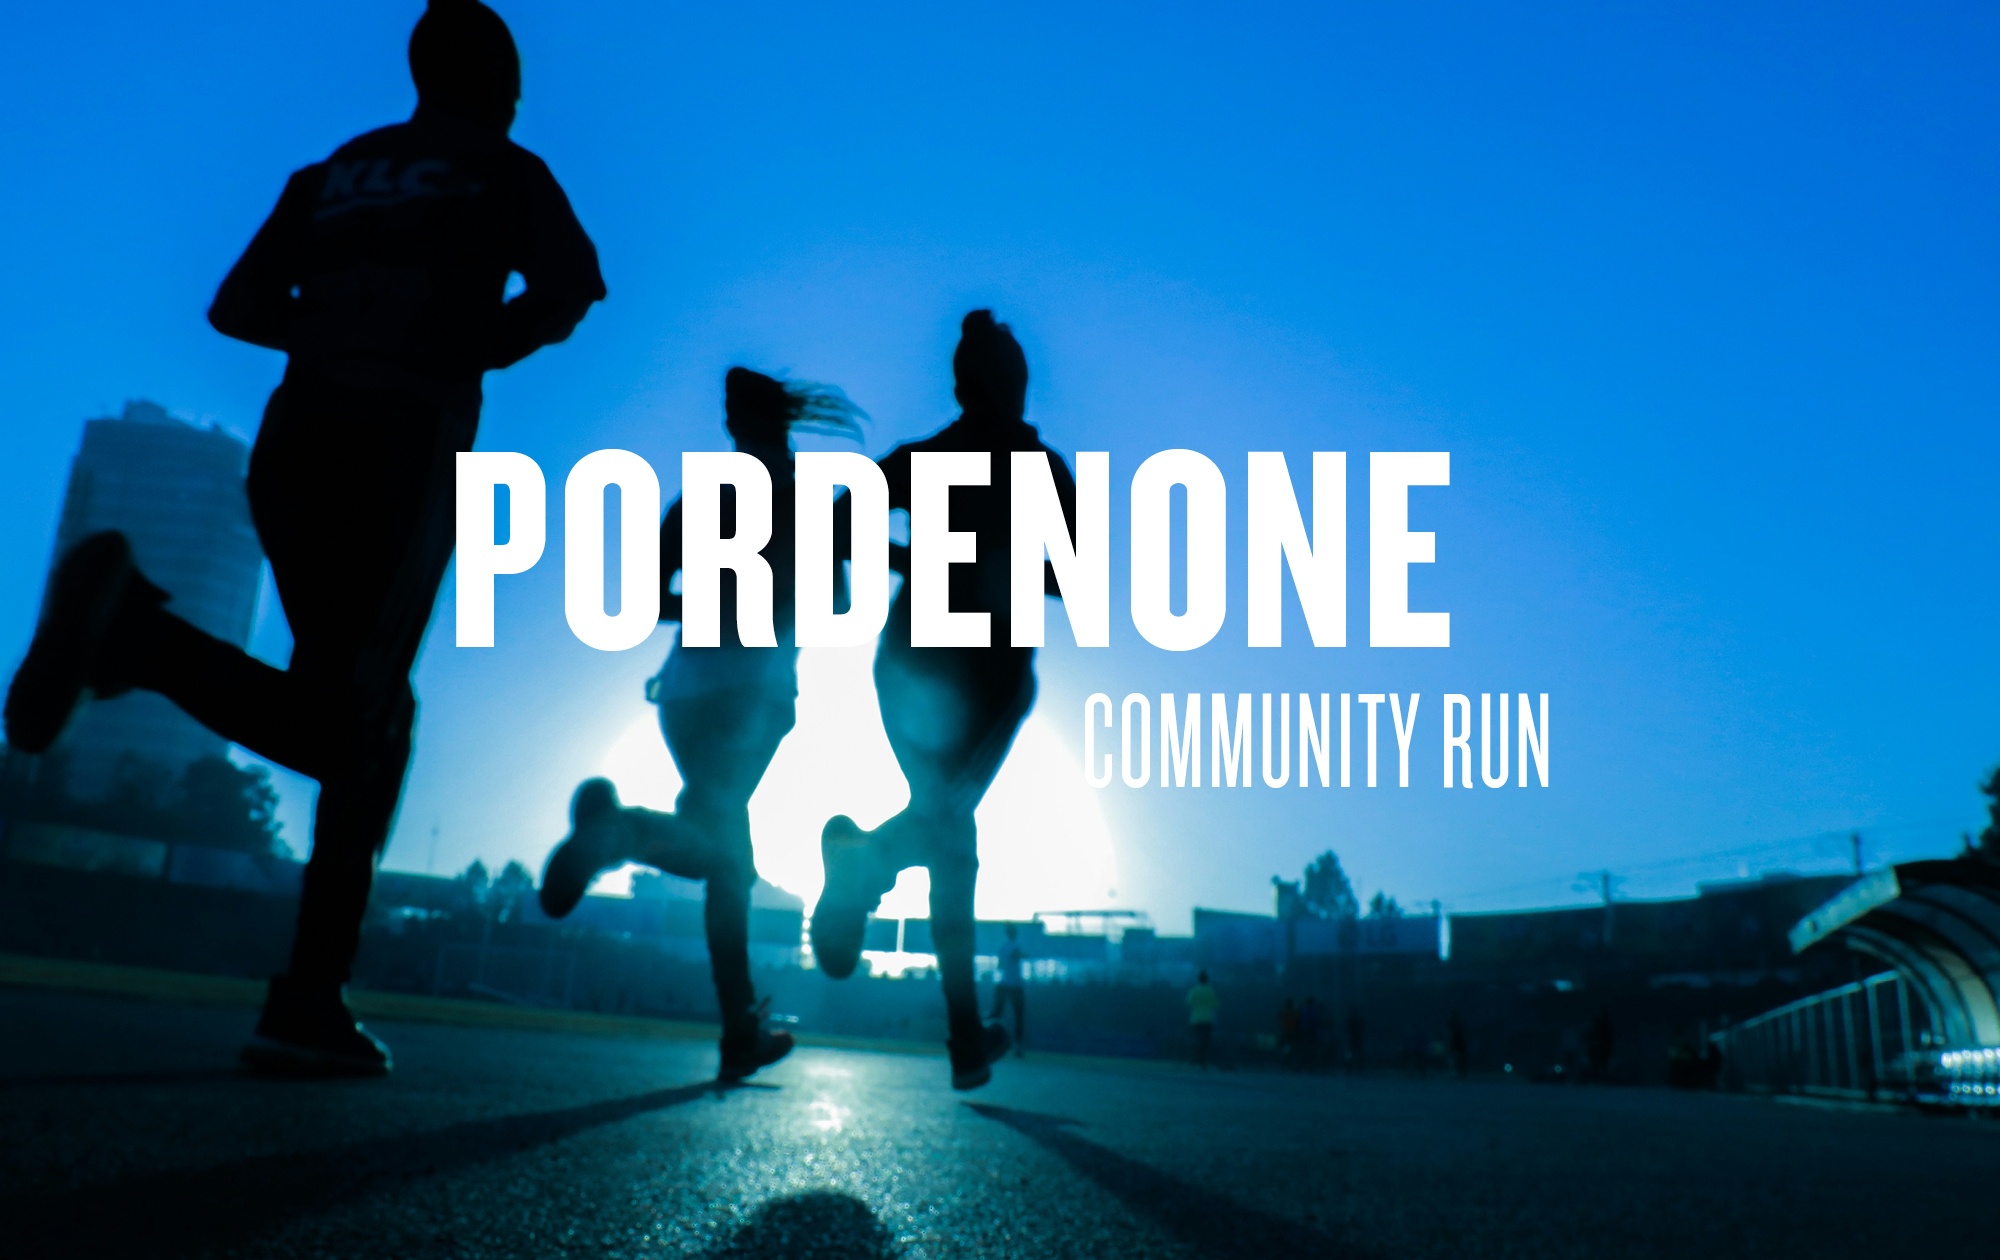 community run pordenone